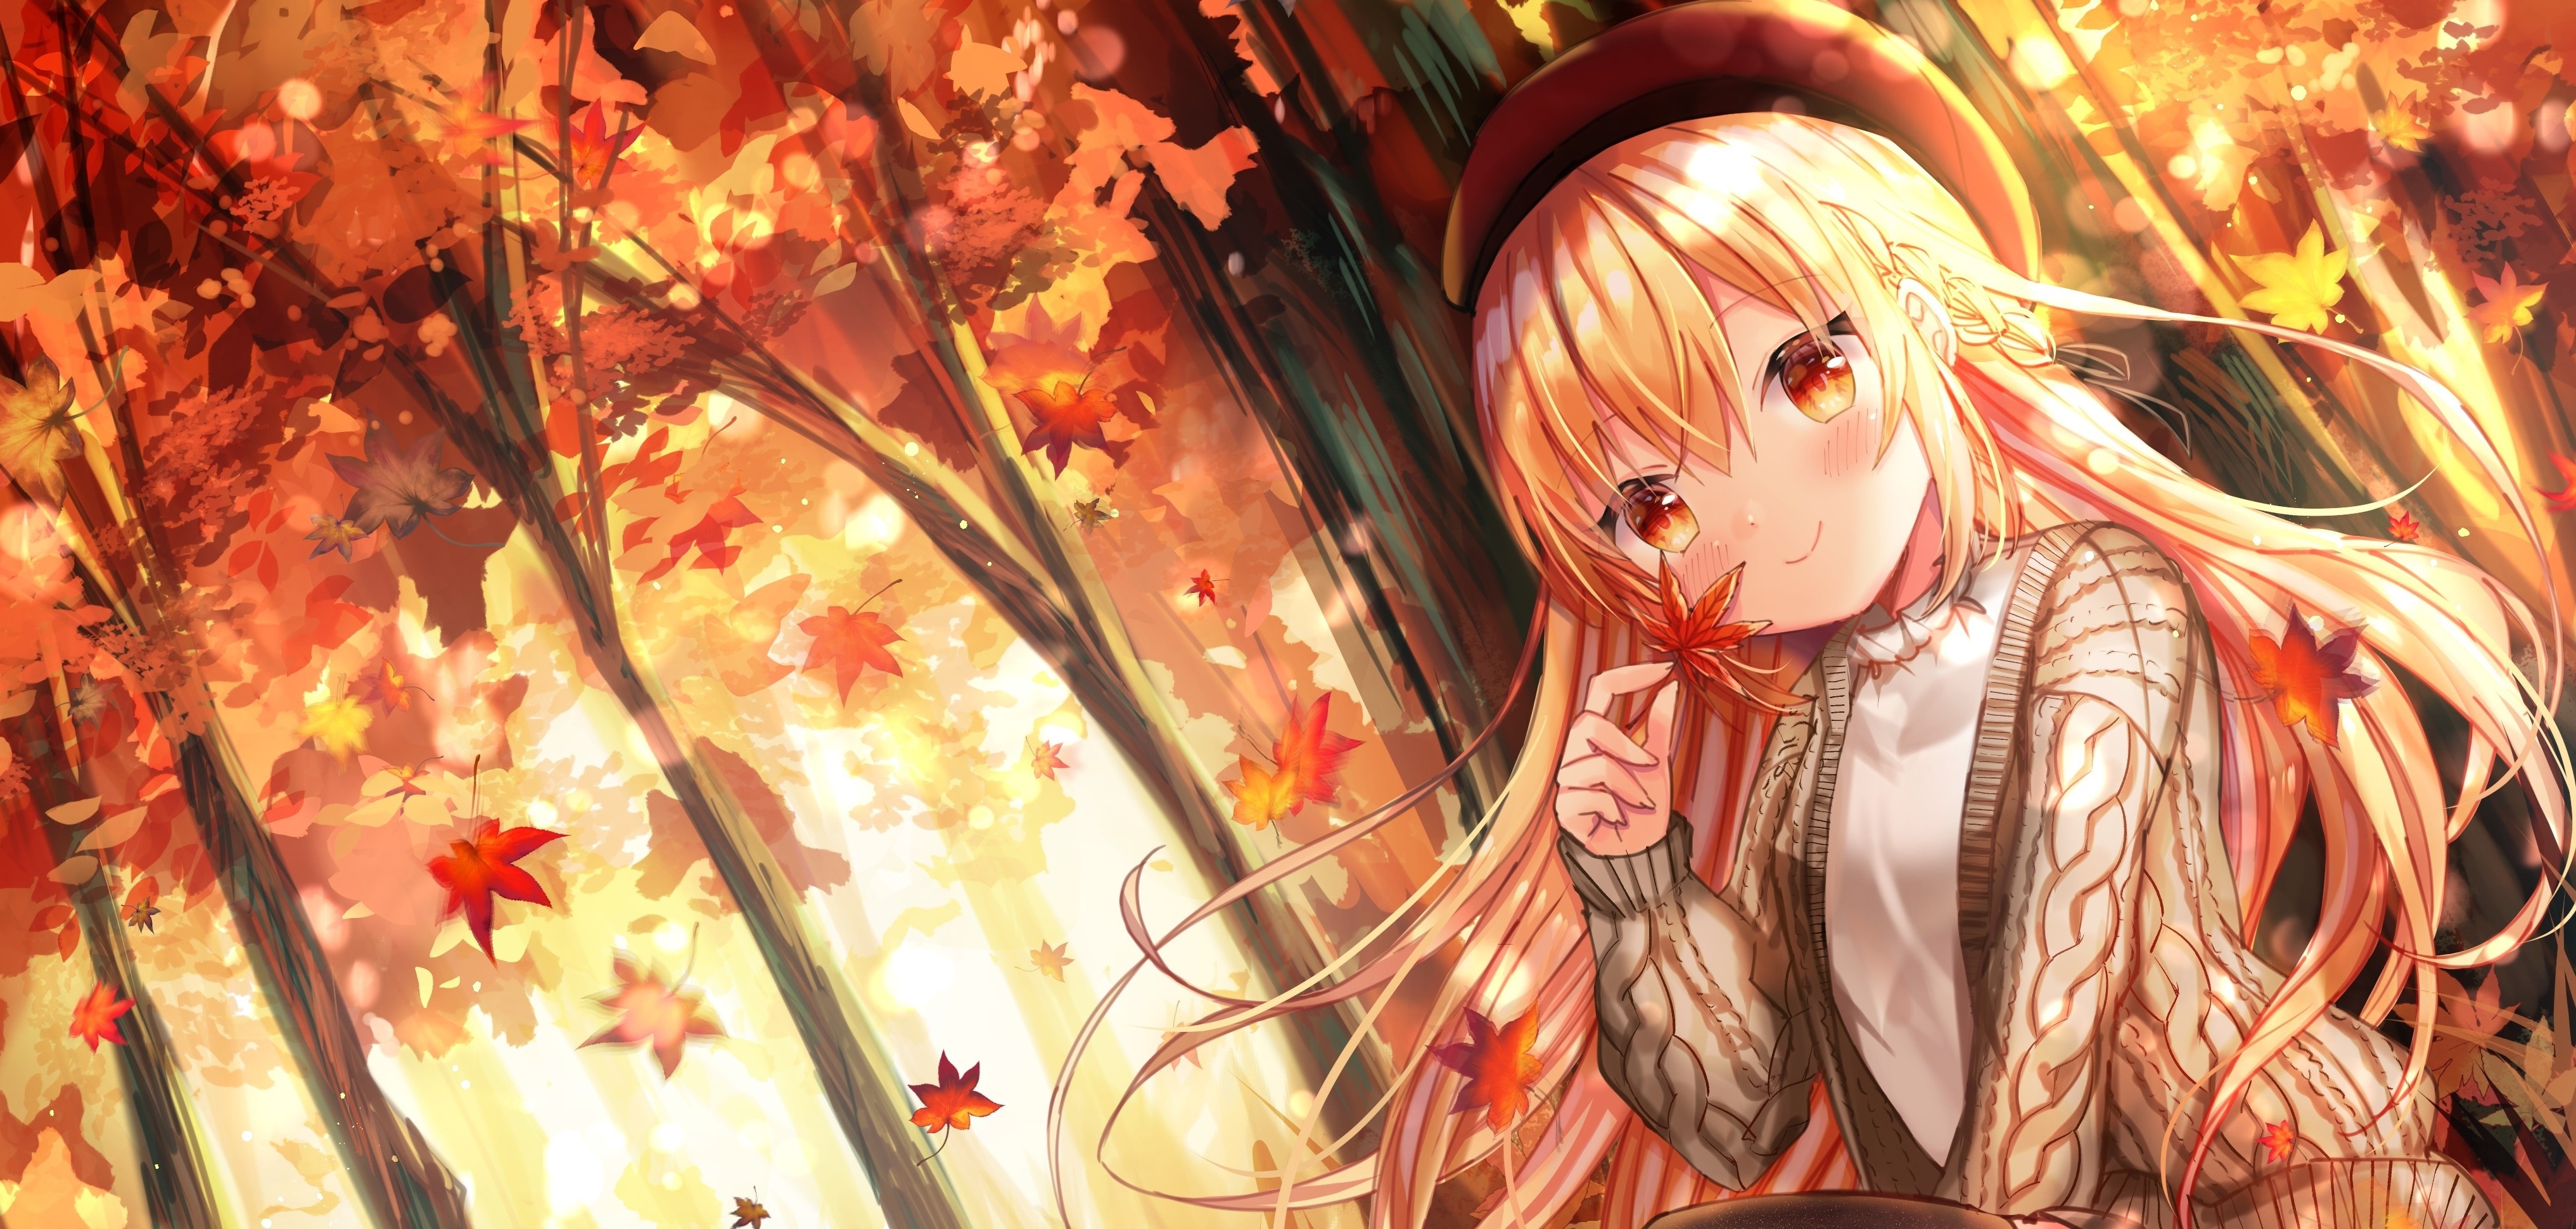 Wallpaper Cute, Fall, Trees, Pretty Anime Girl, Smiling, Sitting, Autumn:4066x1940